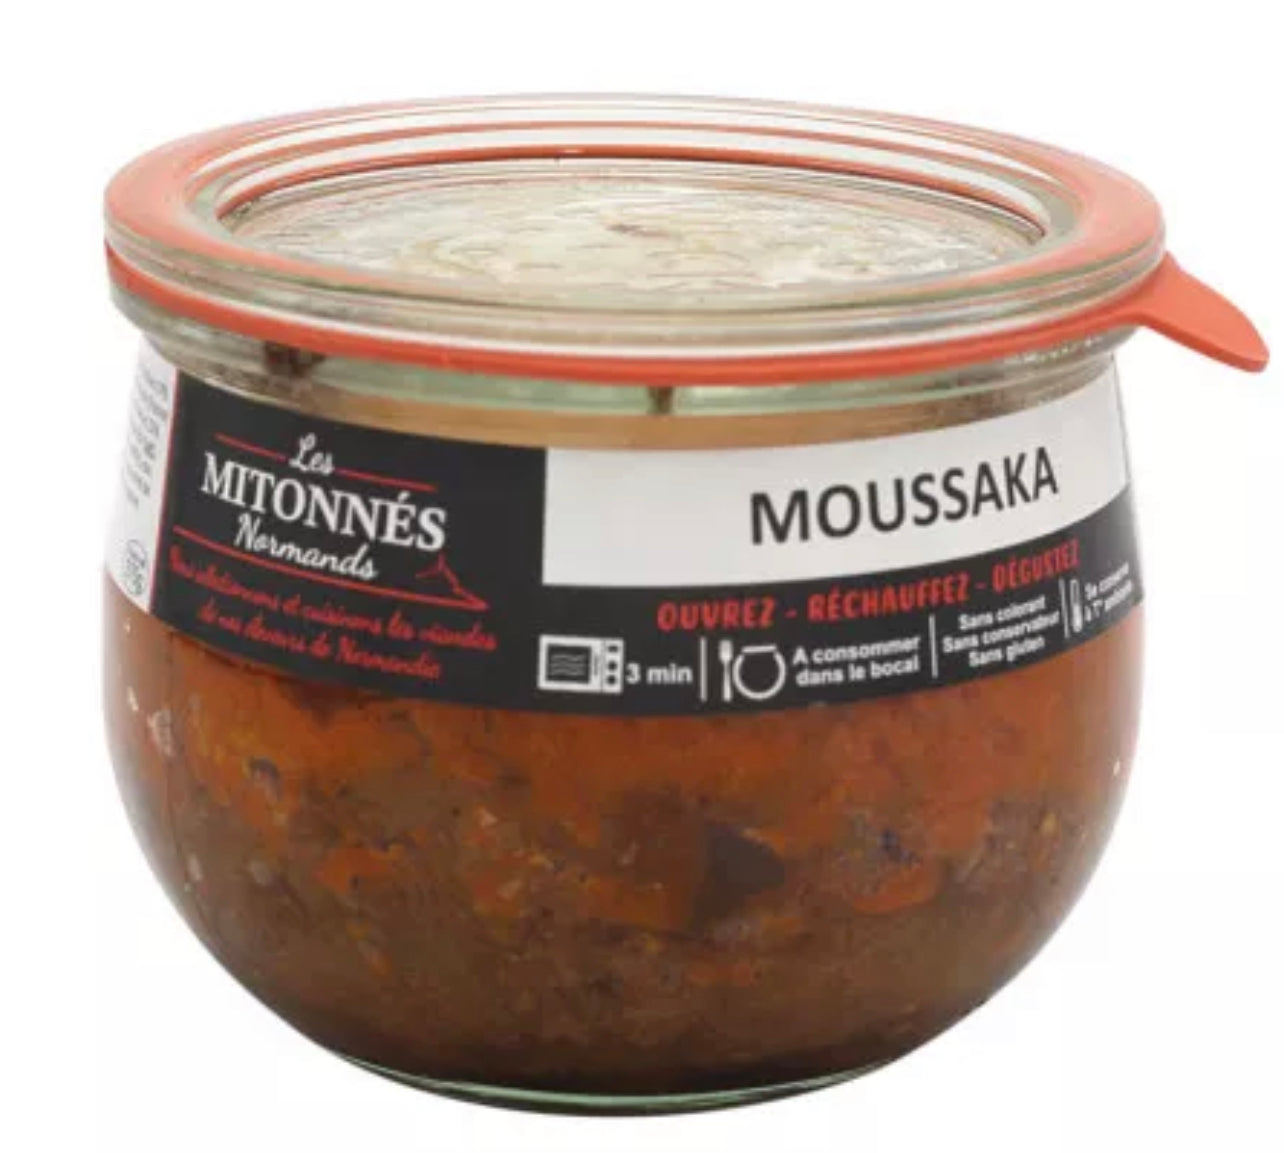 Moussaka au boeuf "Saveurs de Normandie" - 375g